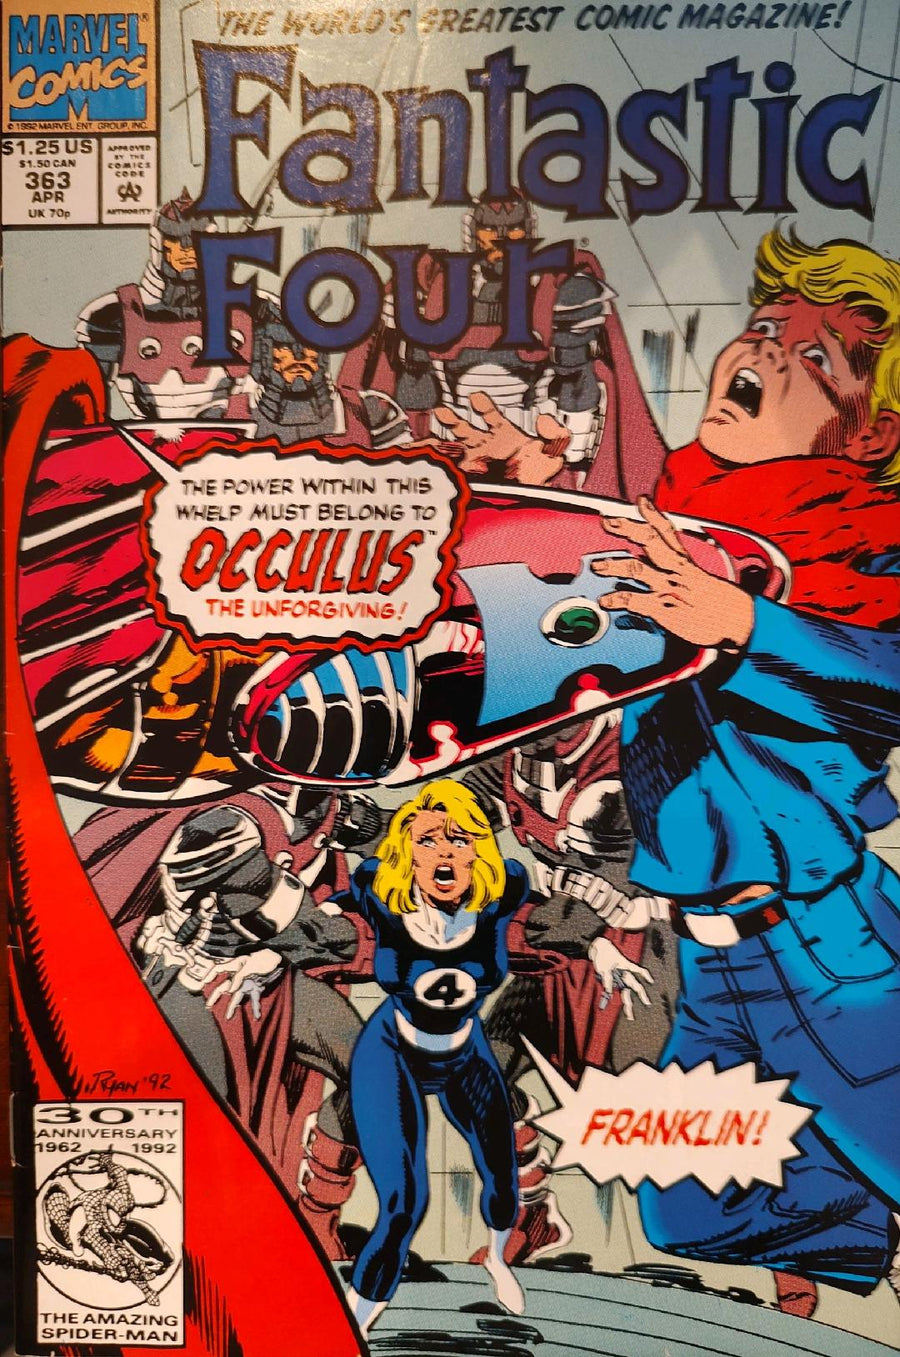 Fantastic Four #363 Comic Book Cover